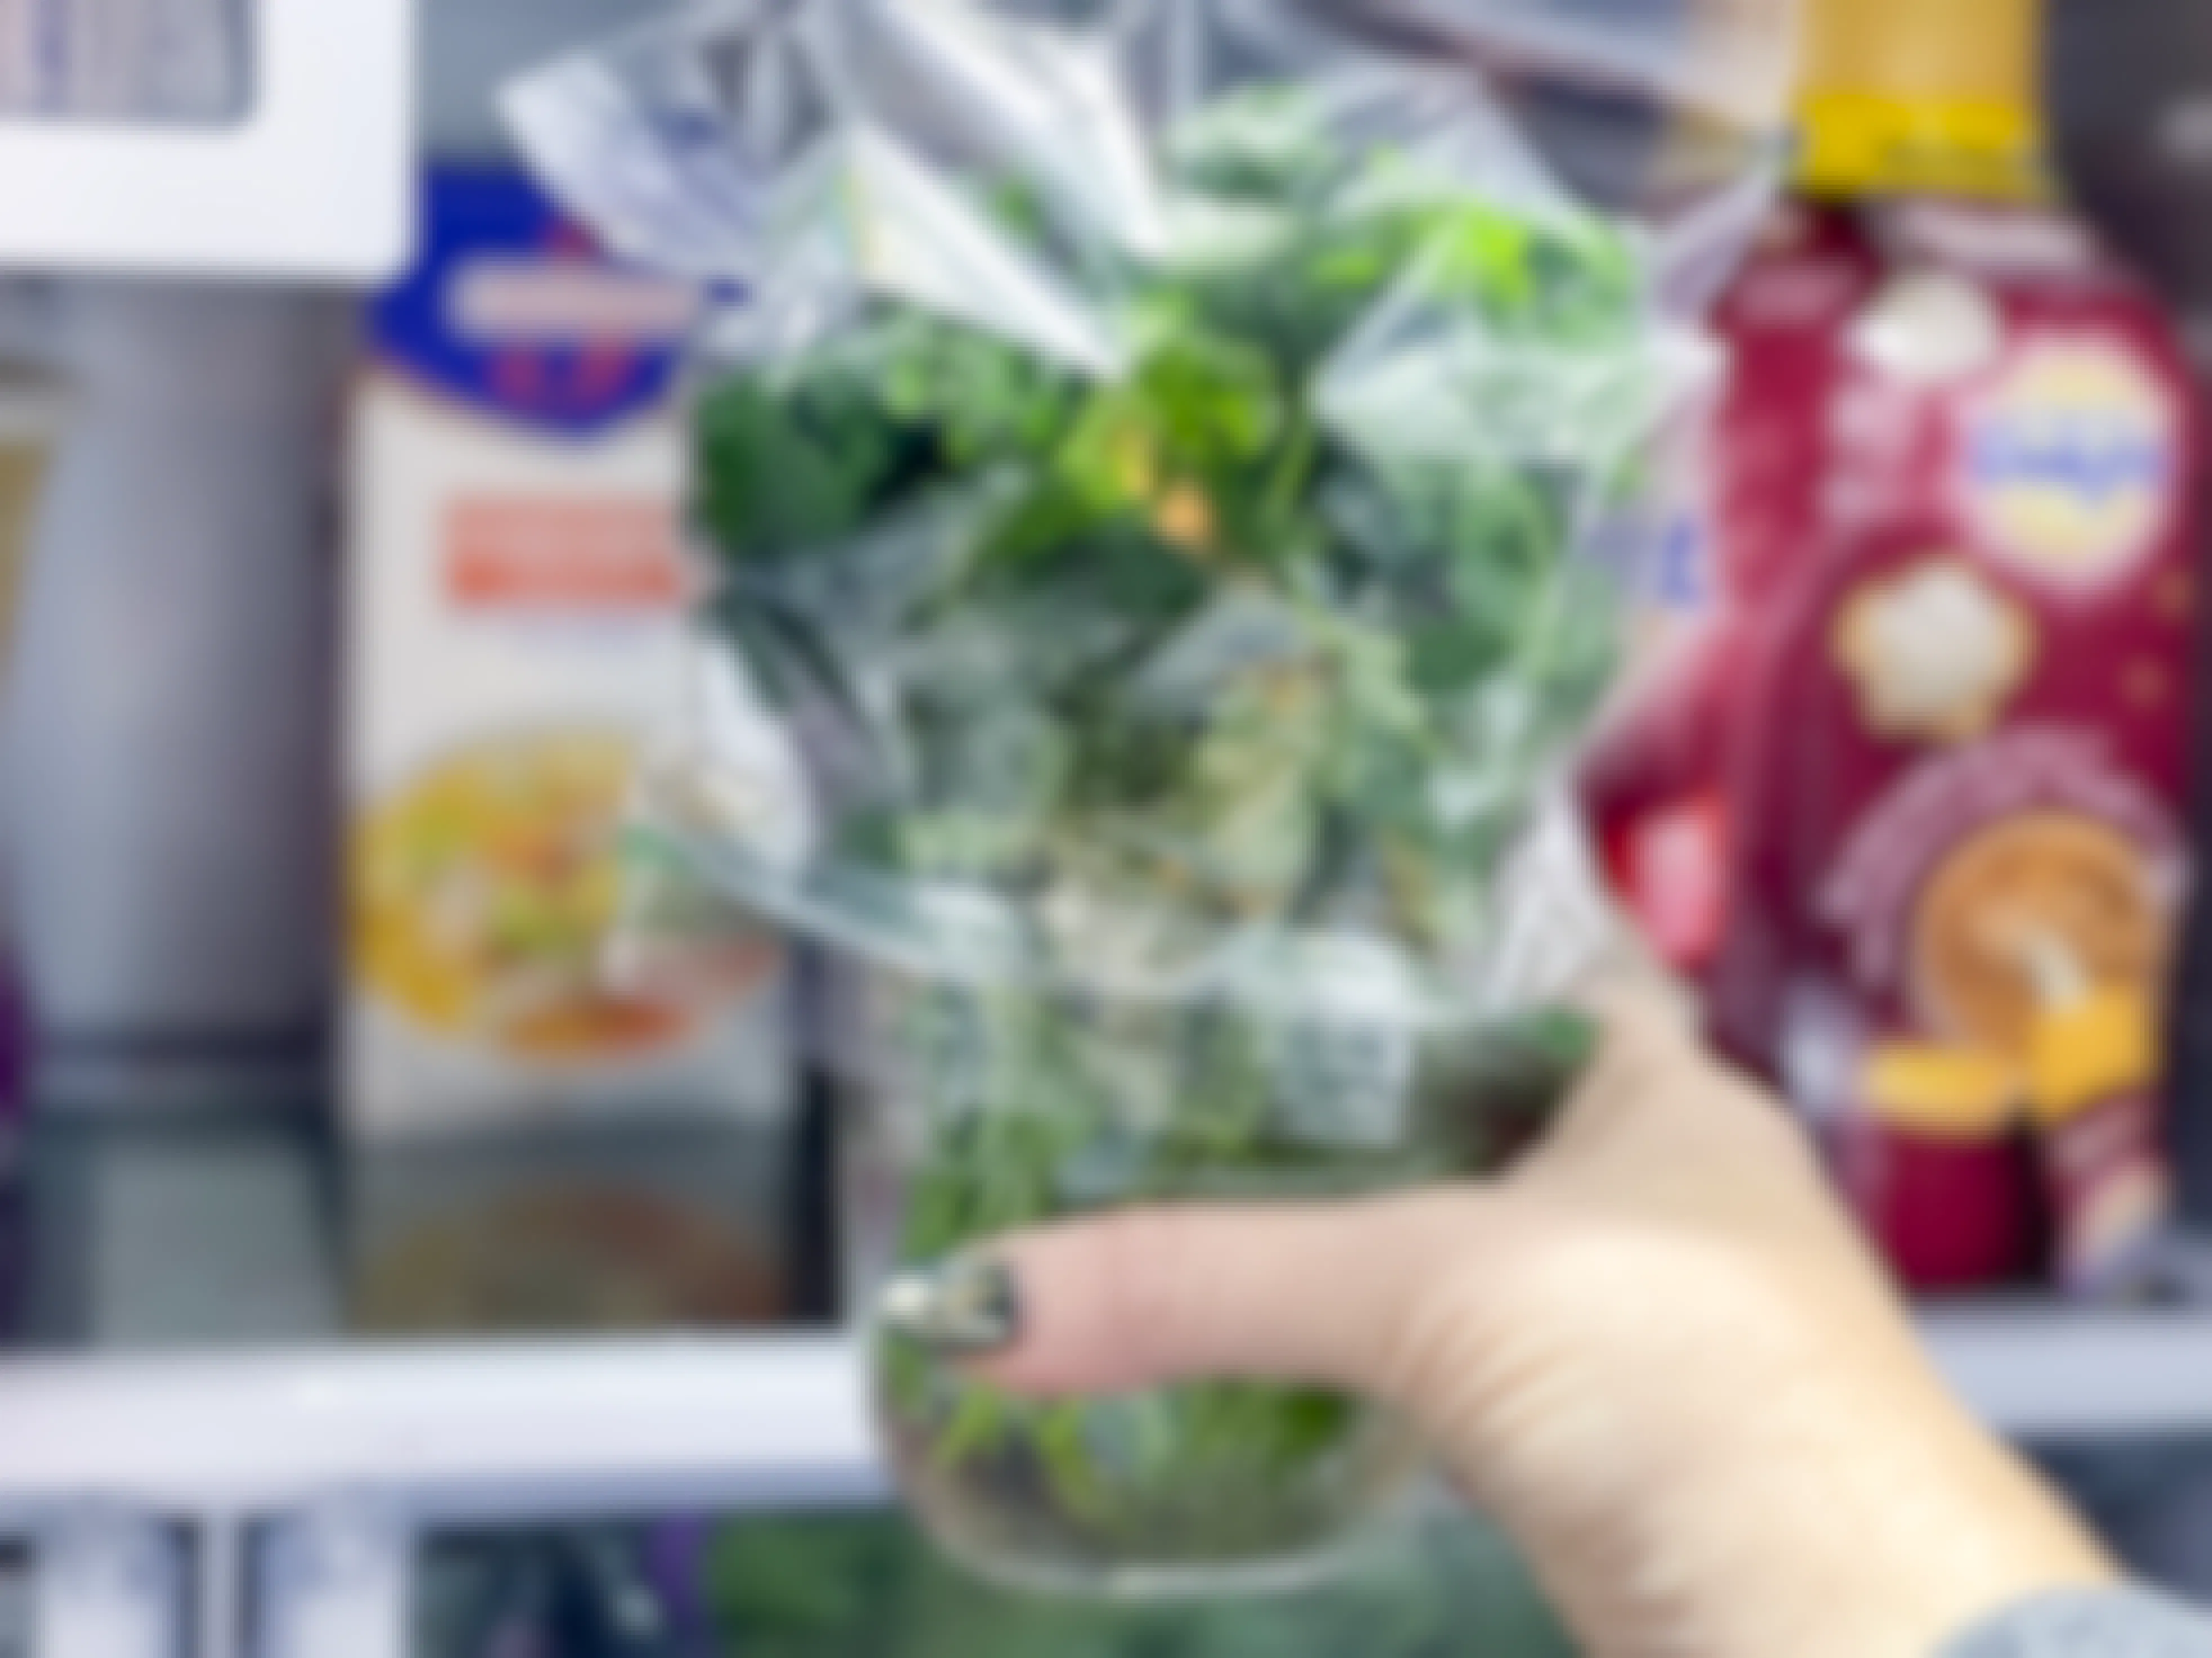 mason jar of cilantro being put in fridge